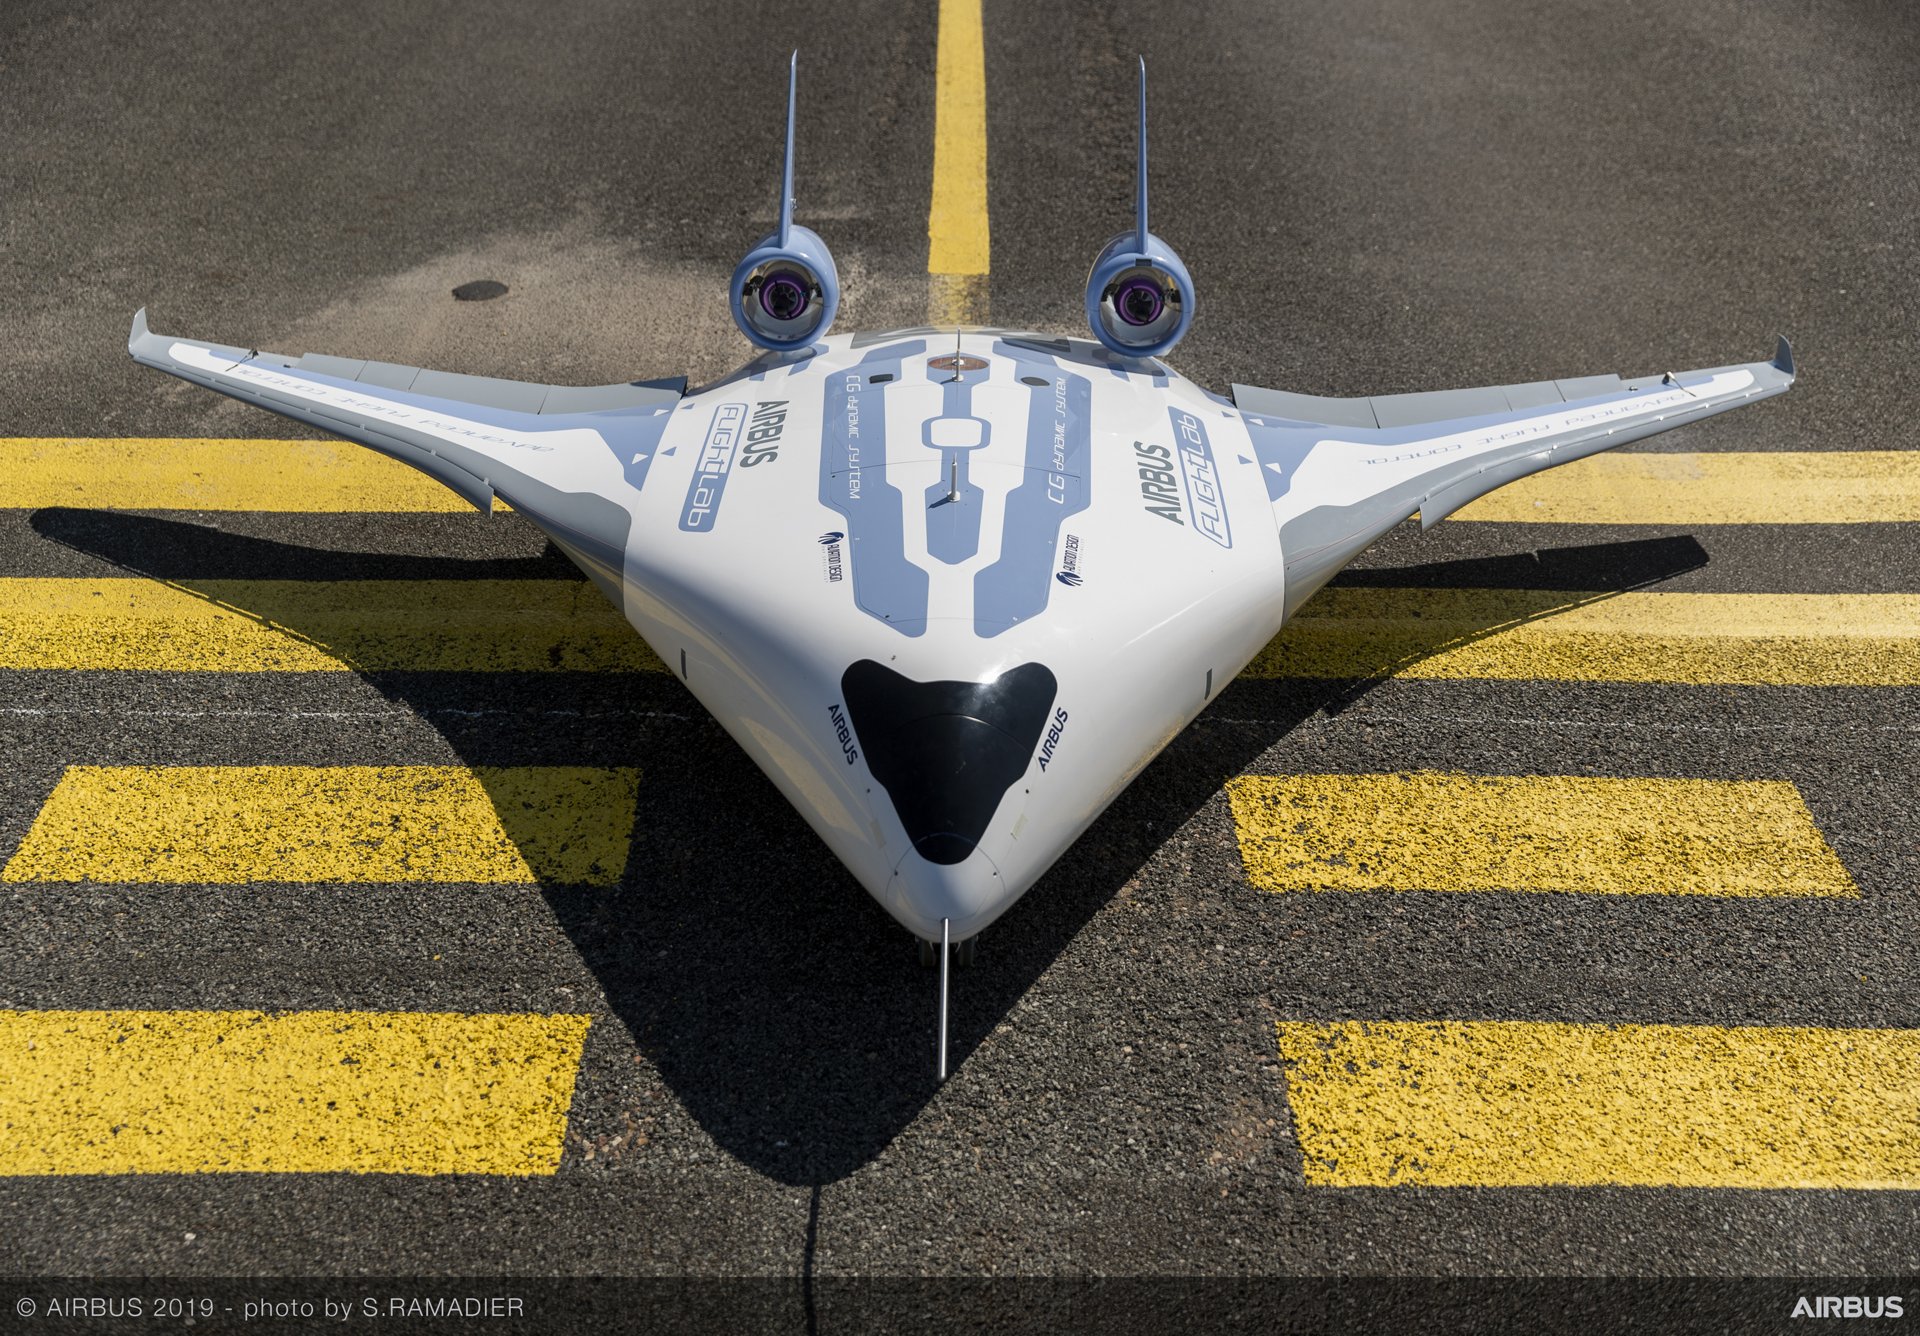 Airbus showcases its new prototype Maveric